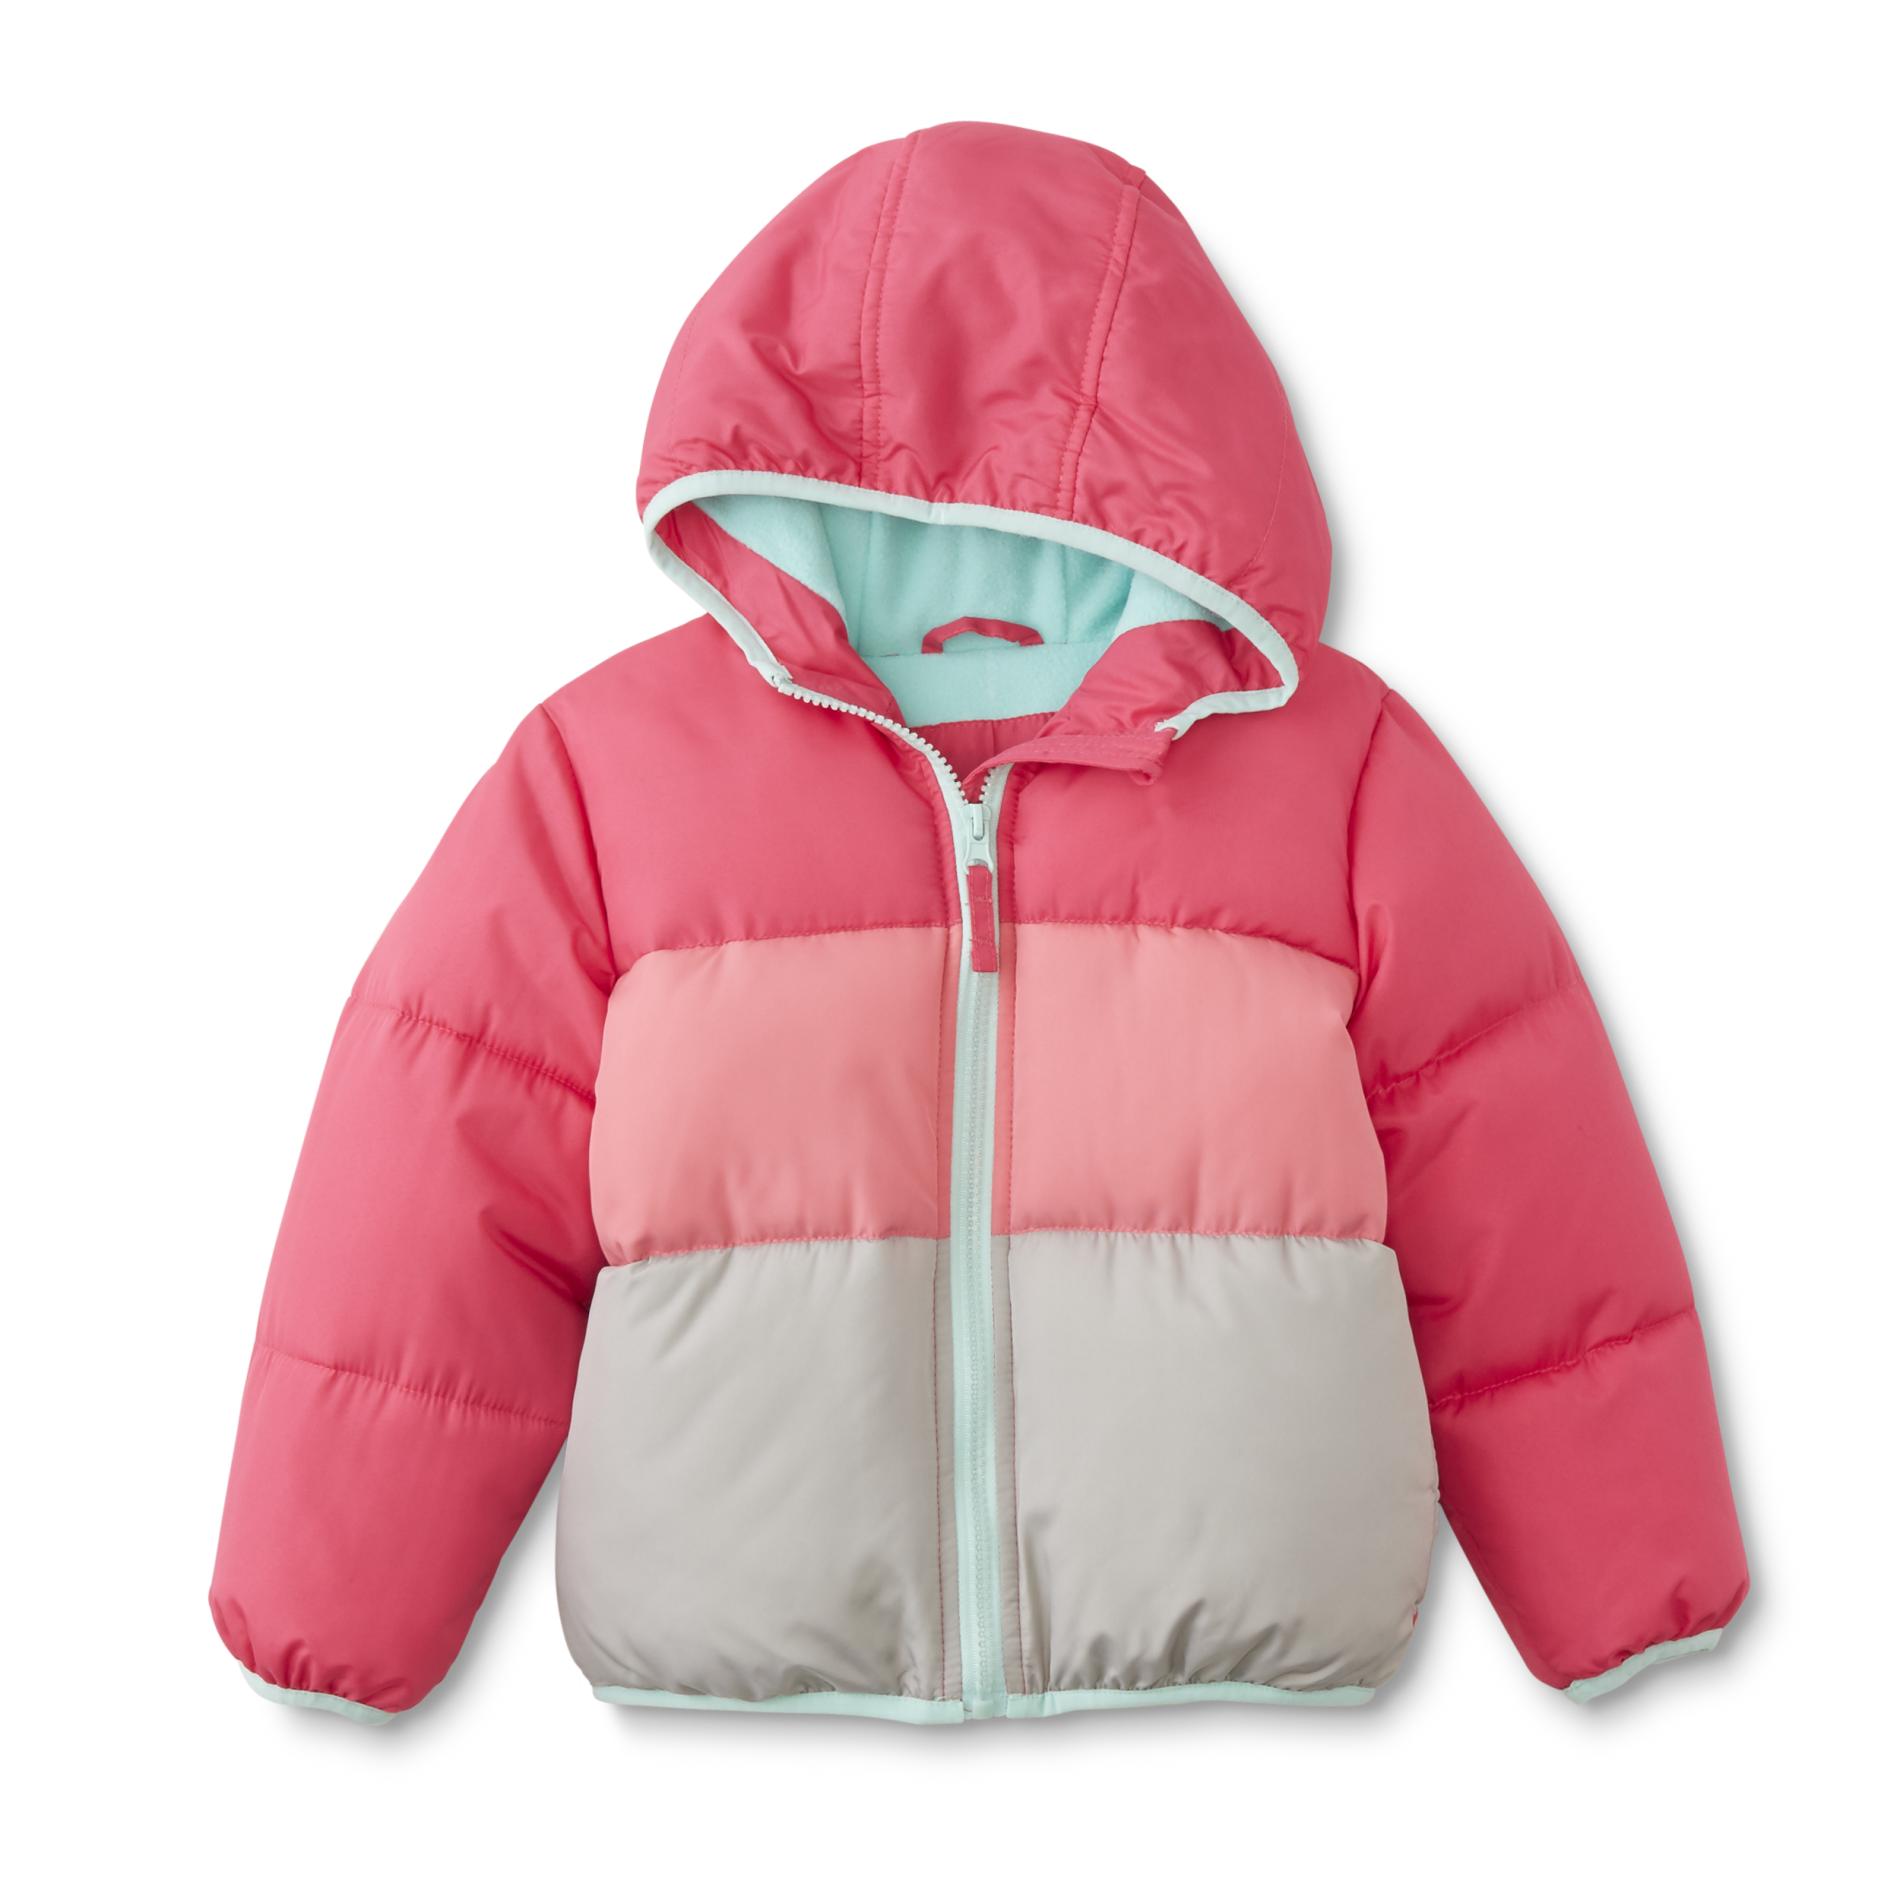 Toughskins Toddler Girl's Hooded Puffer Coat - Colorblock